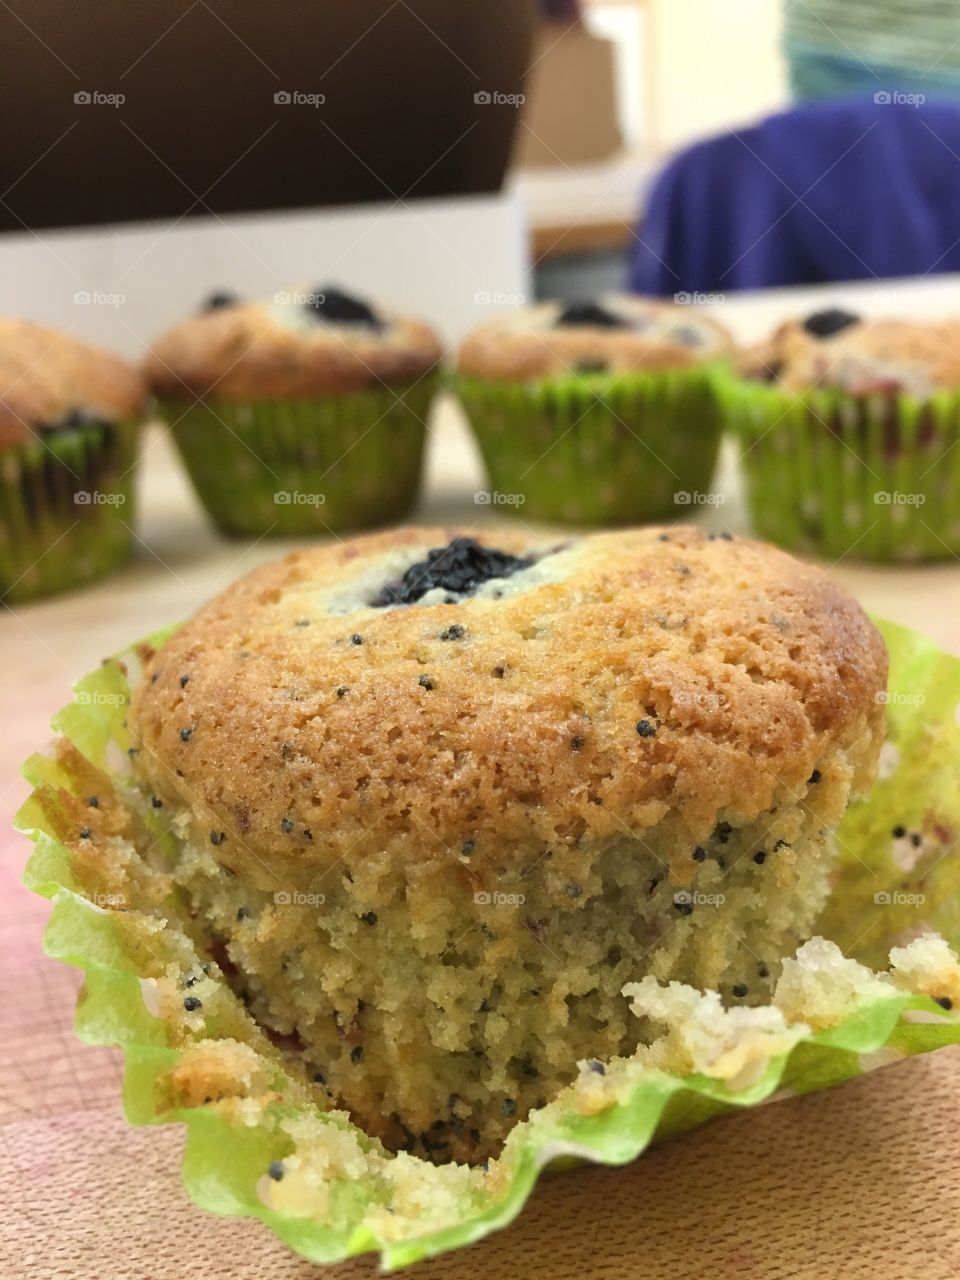 Lemon blackberry poppy seed muffins. Need I say more? 